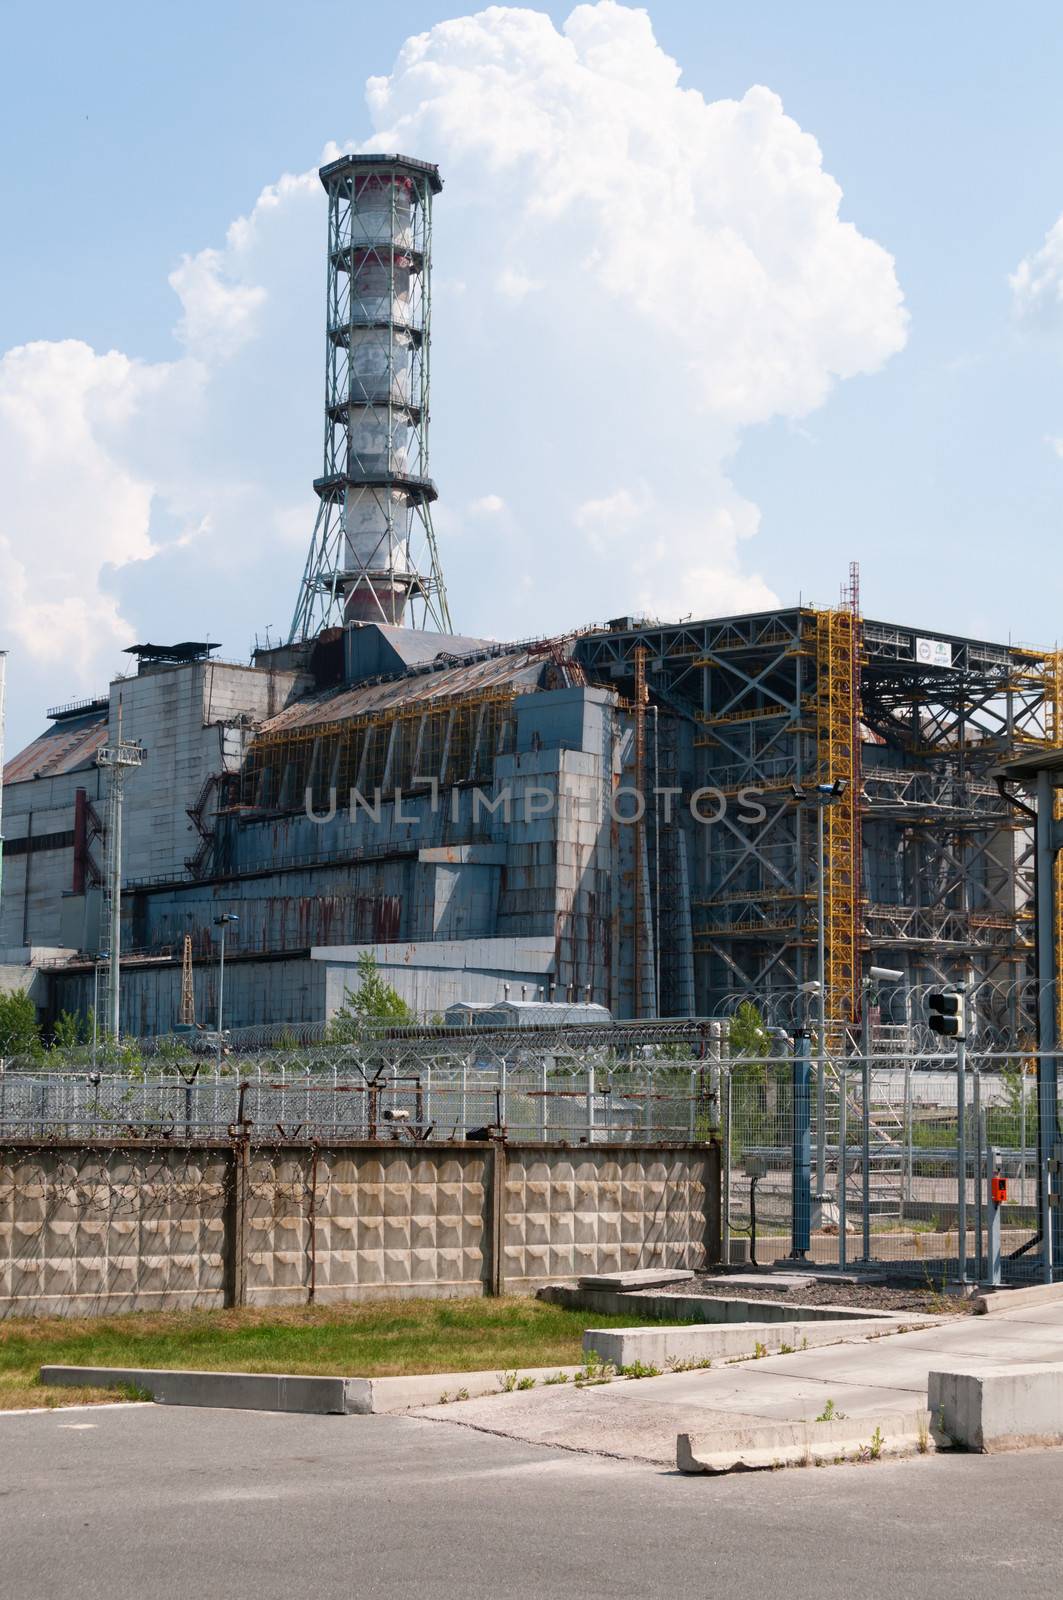 Chernobyl nuclear power station by iryna_rasko